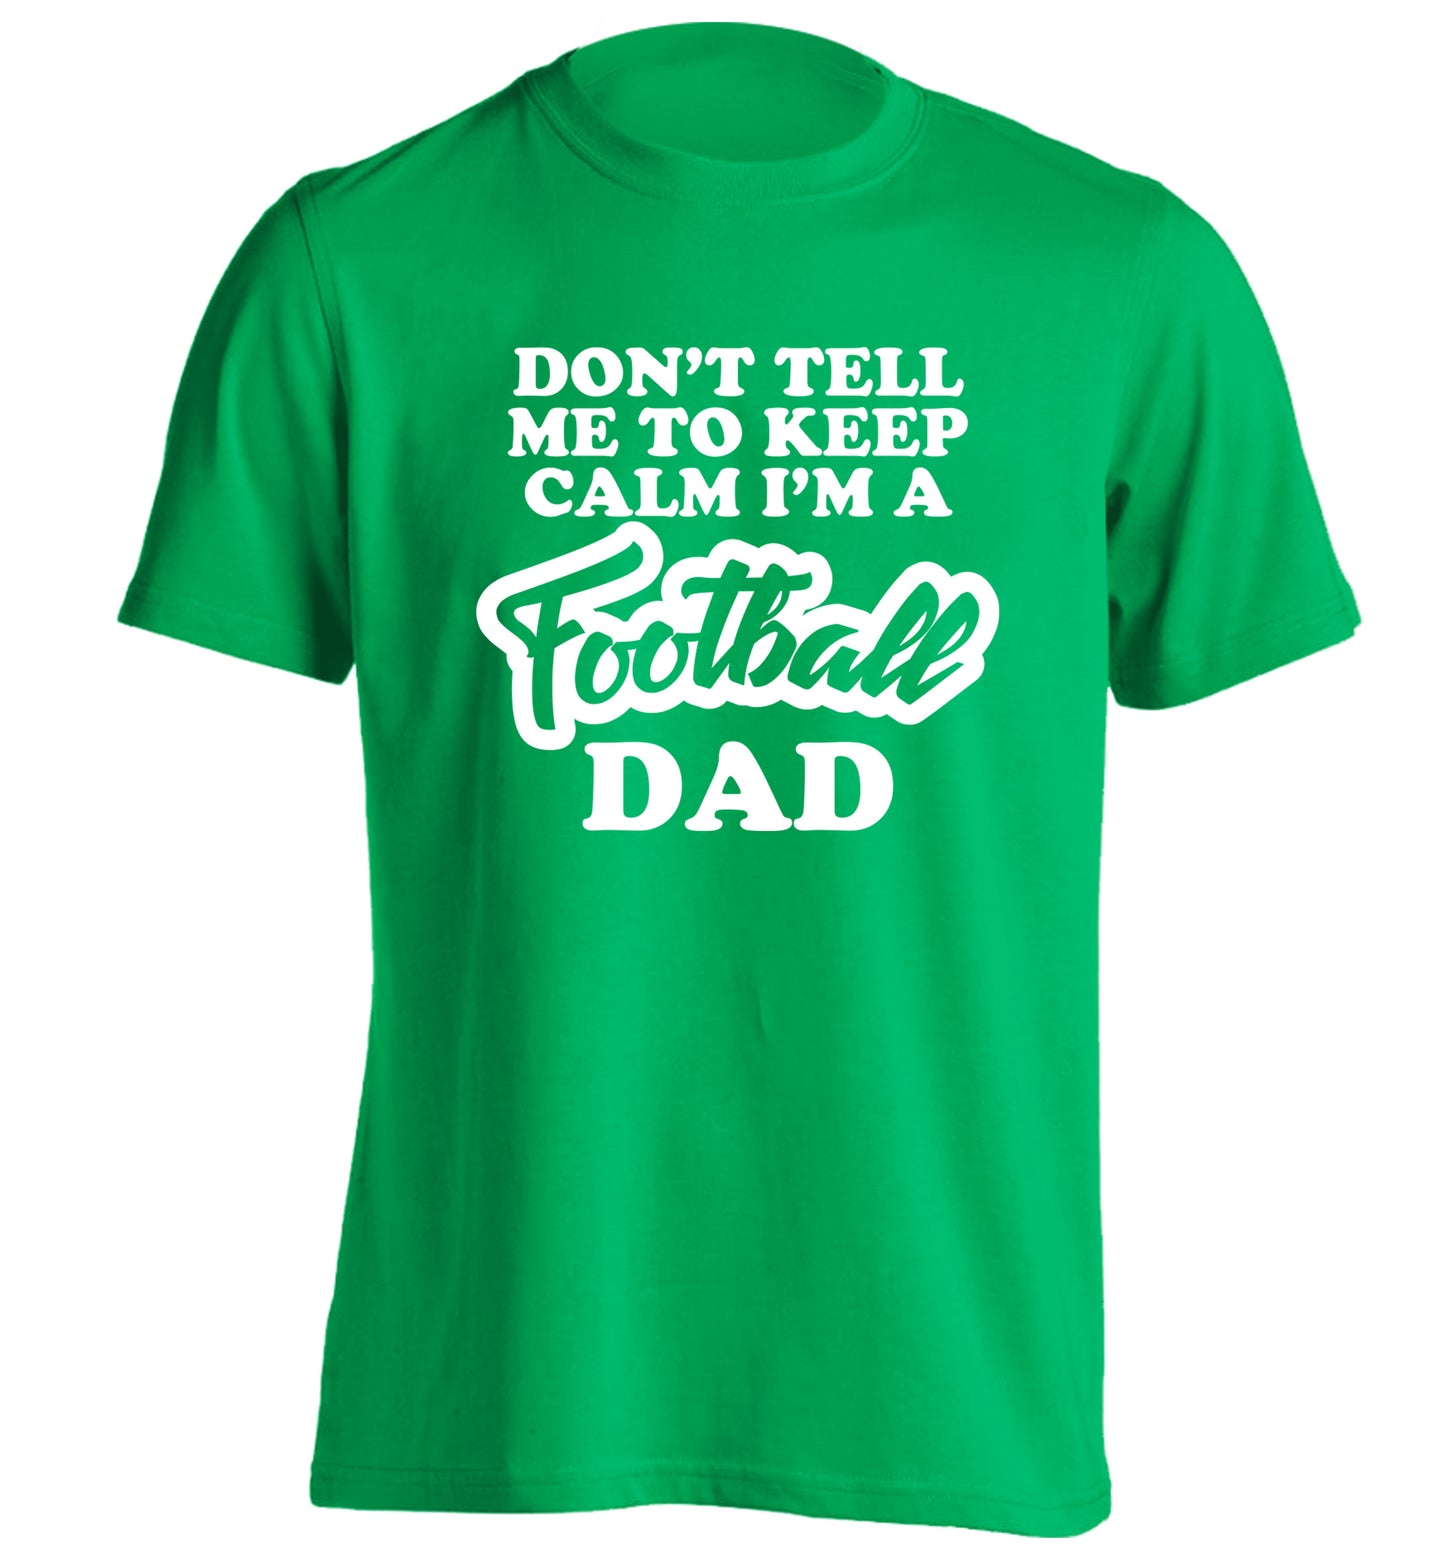 Don't tell me to keep calm I'm a football grandad adults unisexgreen Tshirt 2XL